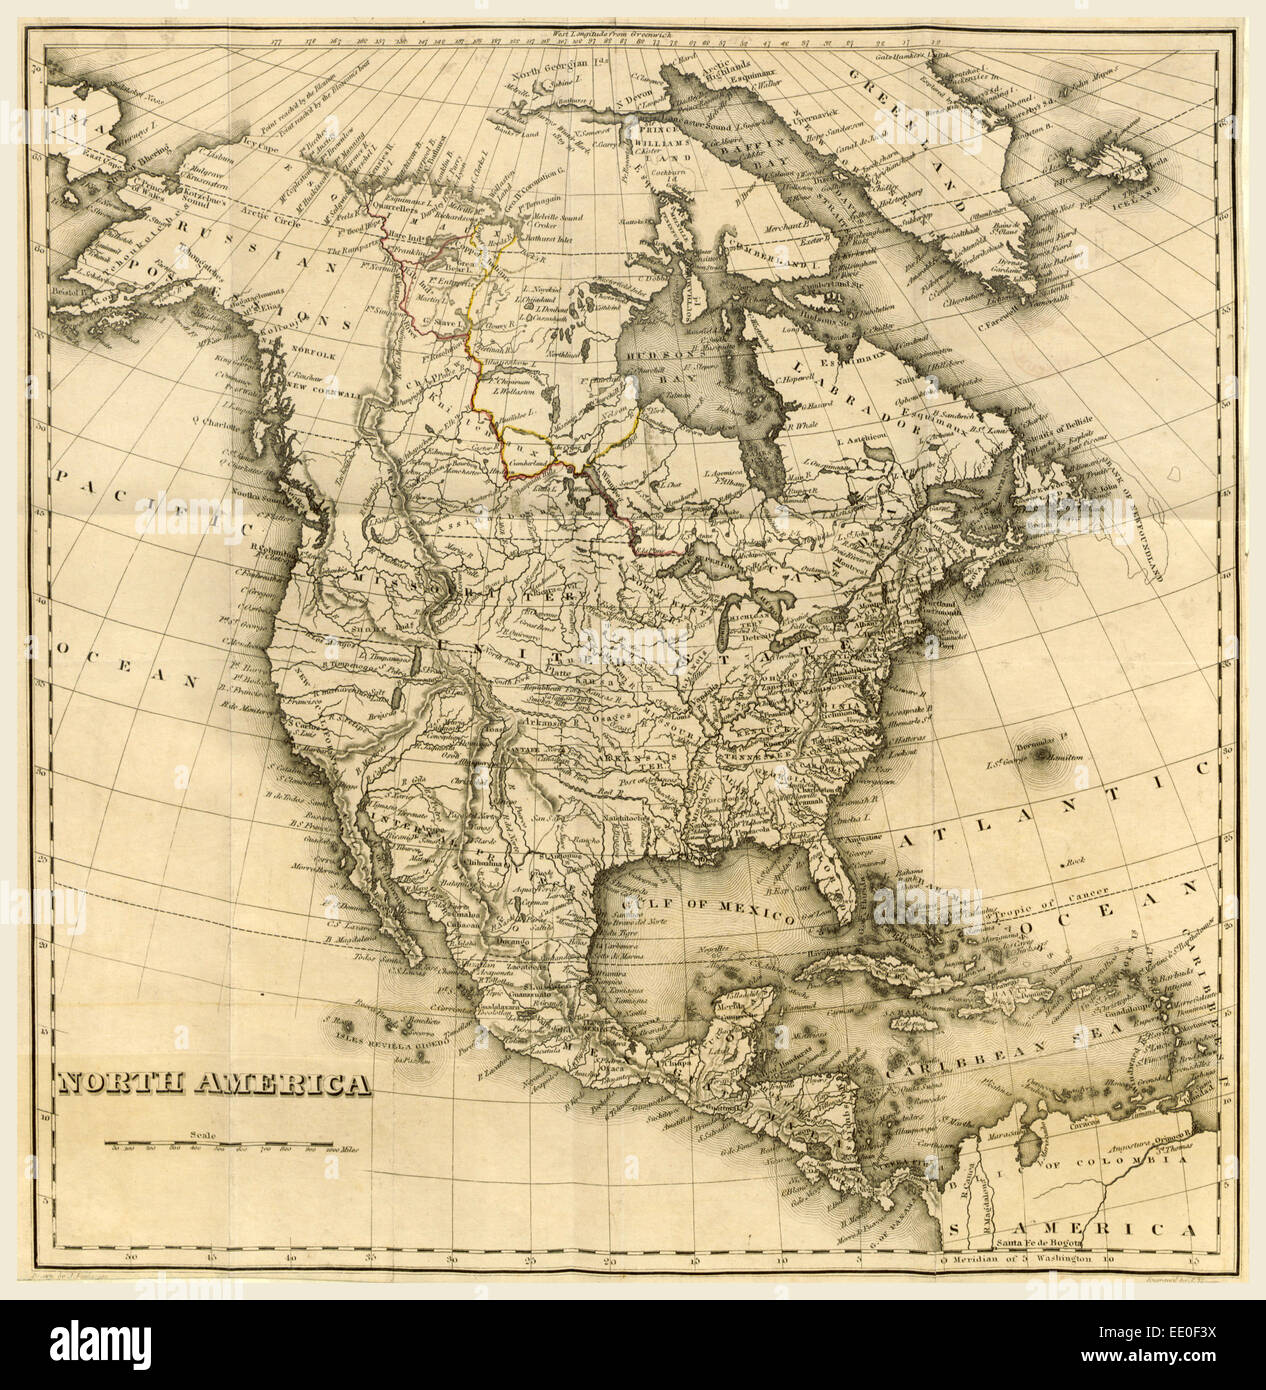 North America Map, 19th century engraving Stock Photo